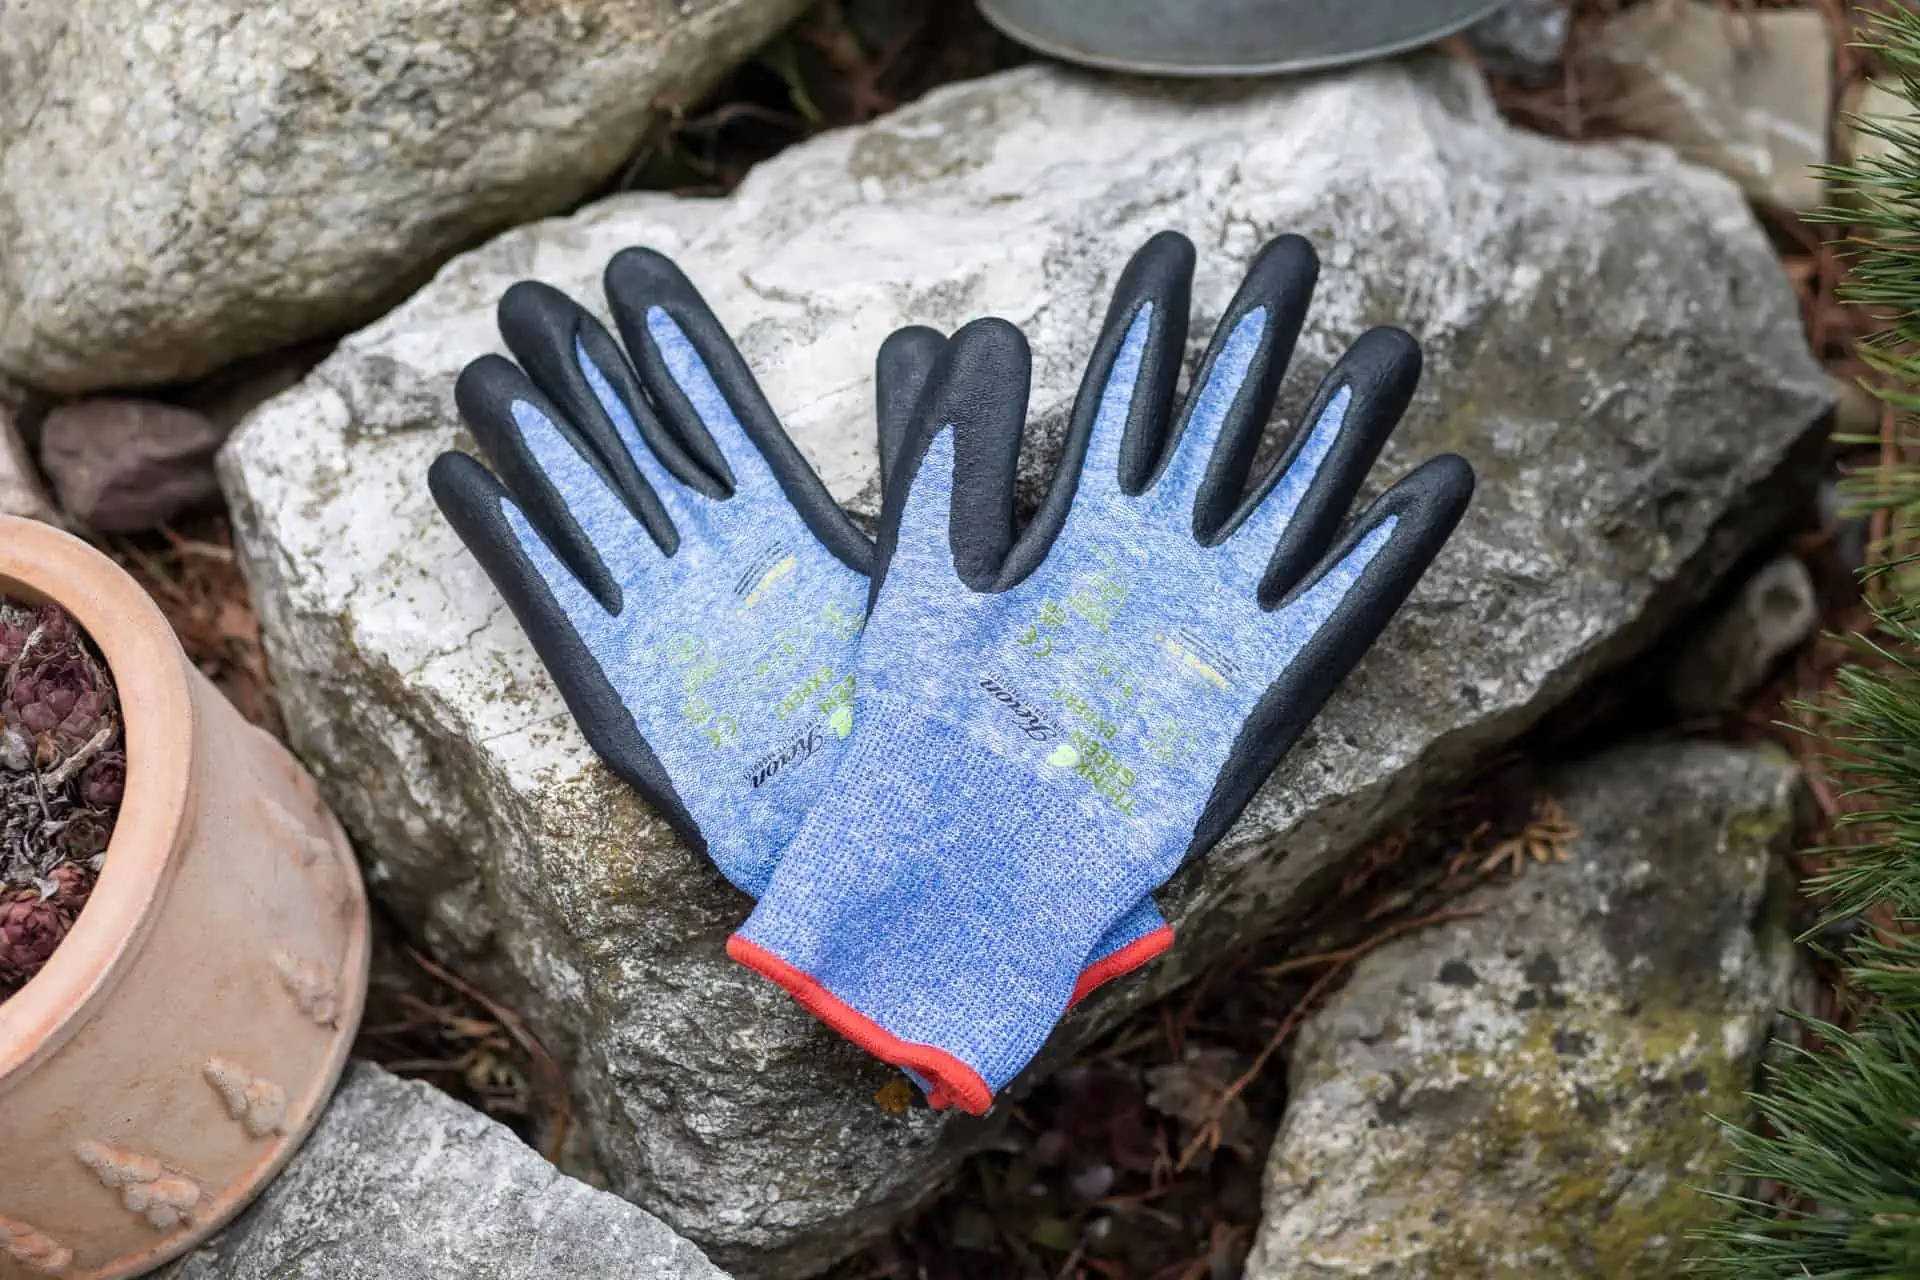 Glove ThinkGreen Expert blue, Nitrile Foam size 10/XL